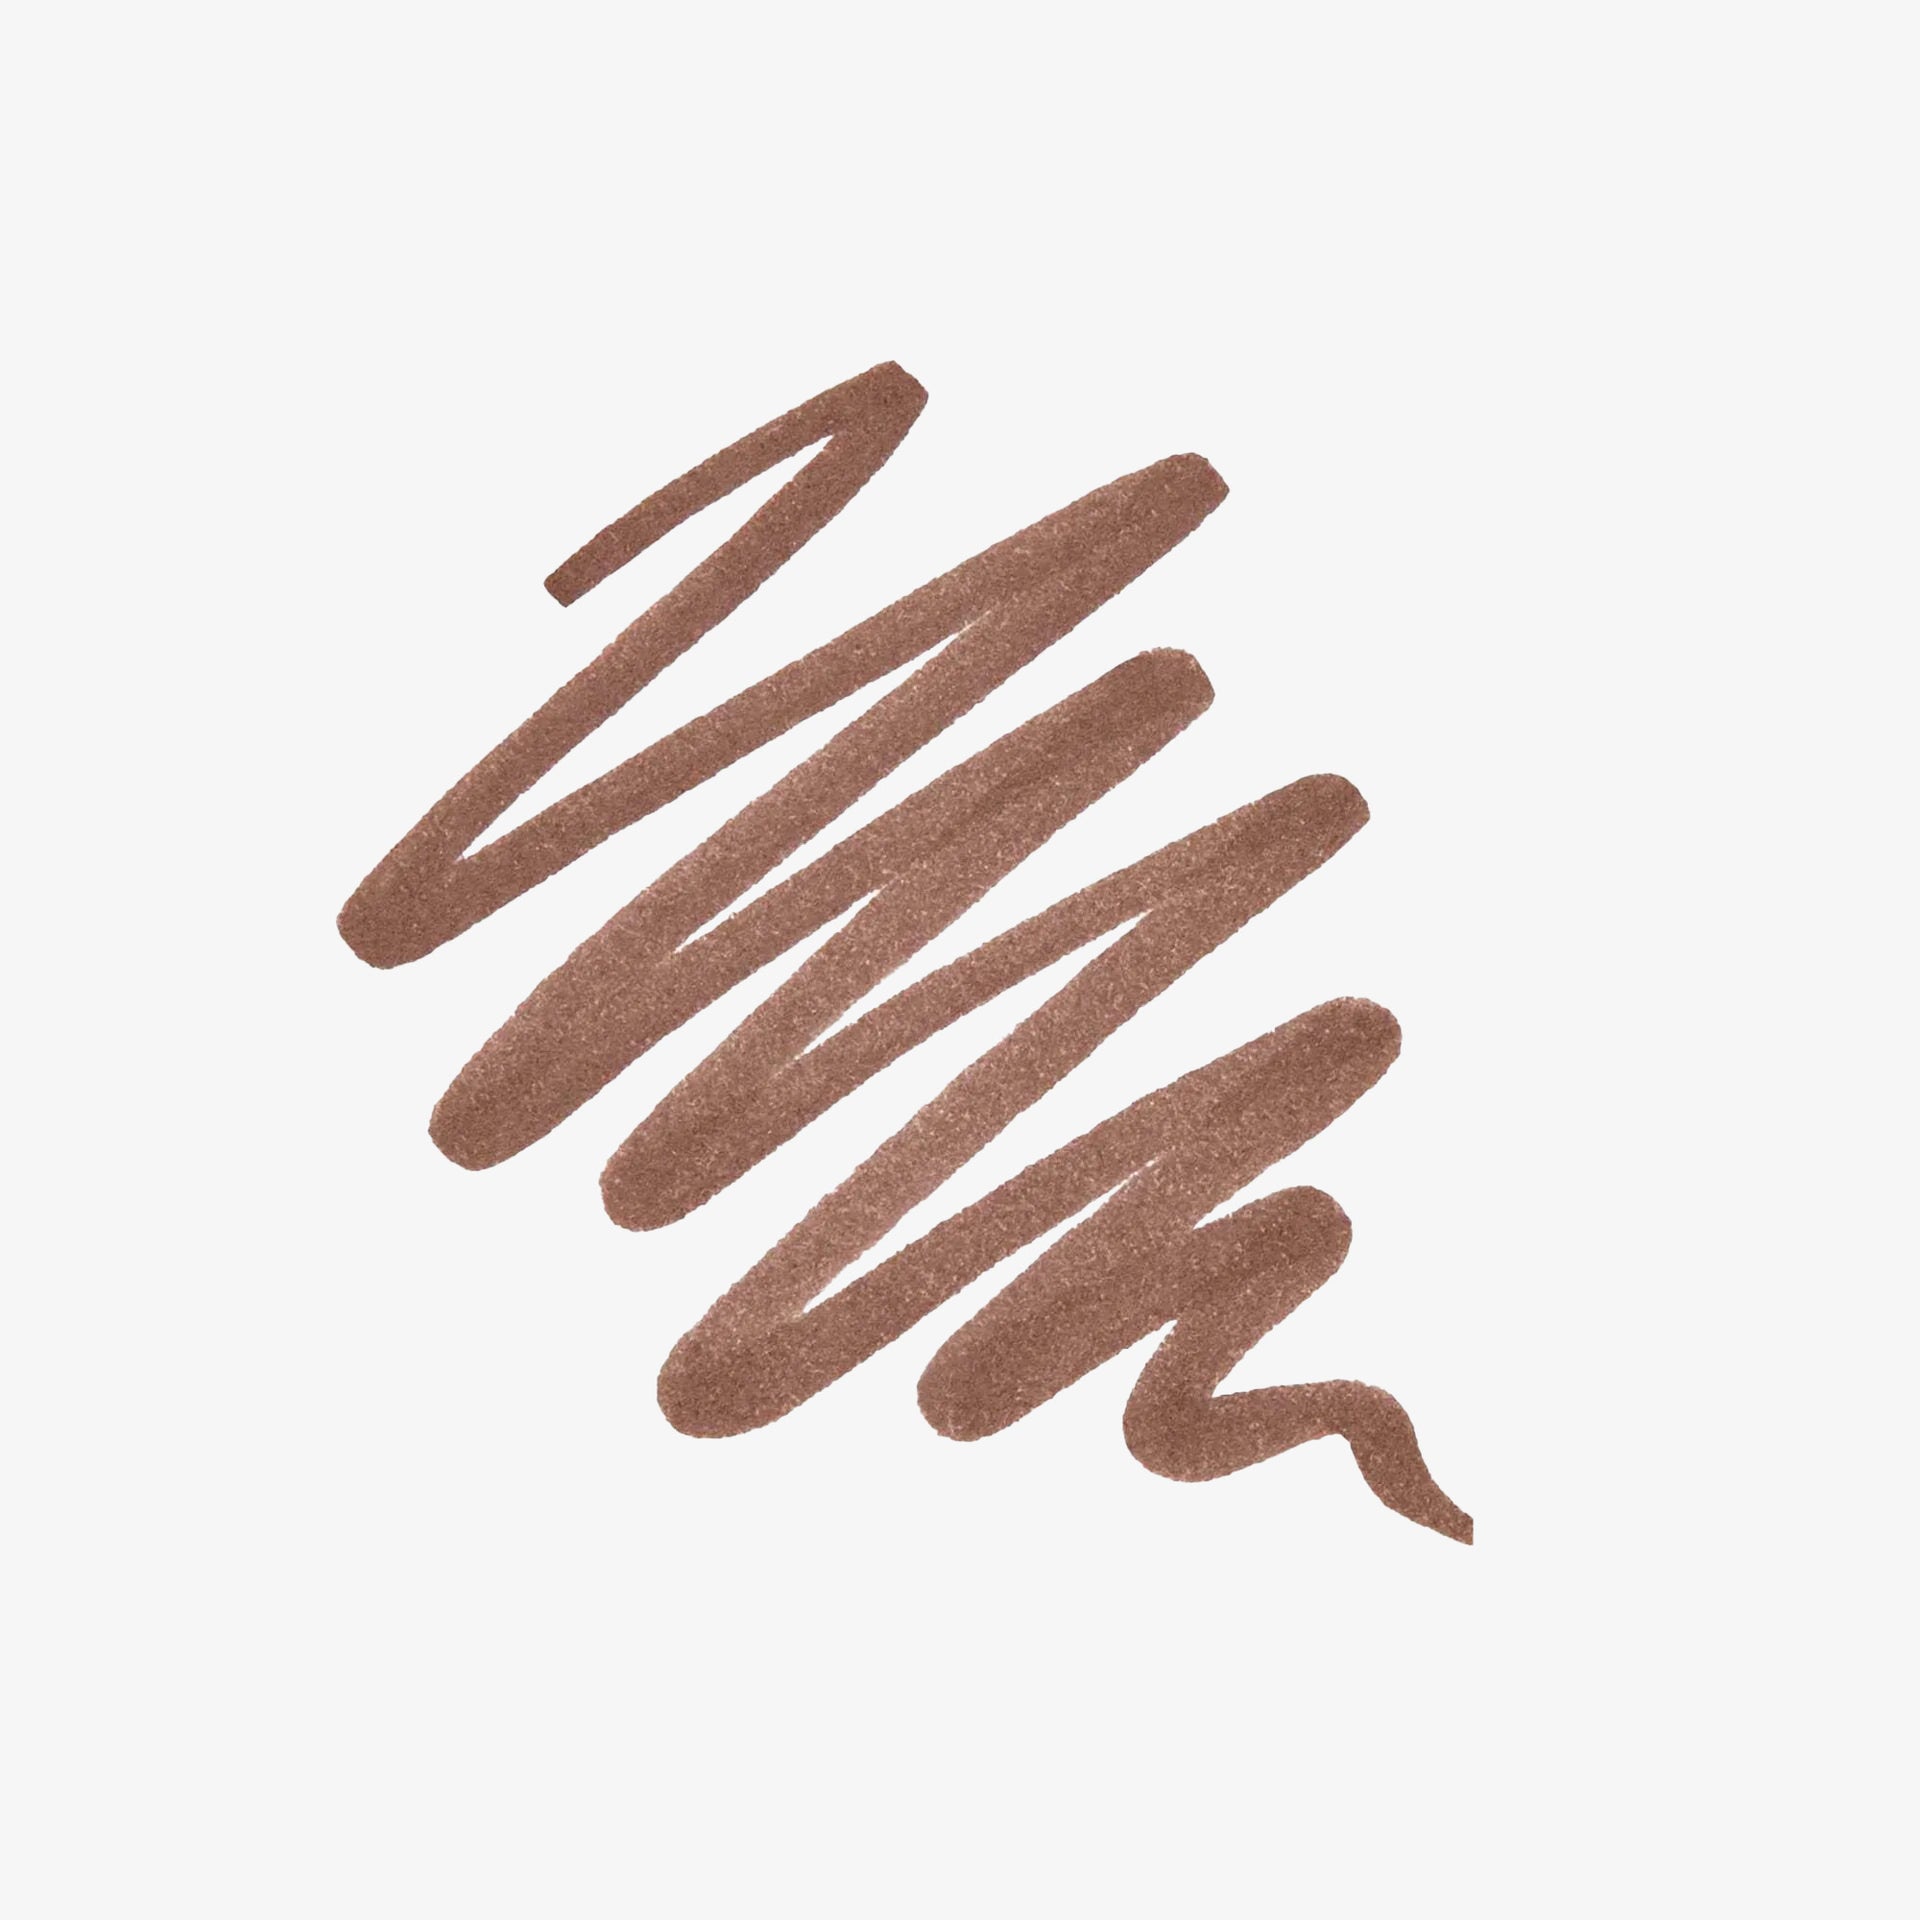 Chocolate | Brow Pen Swatch Shade Chocolate